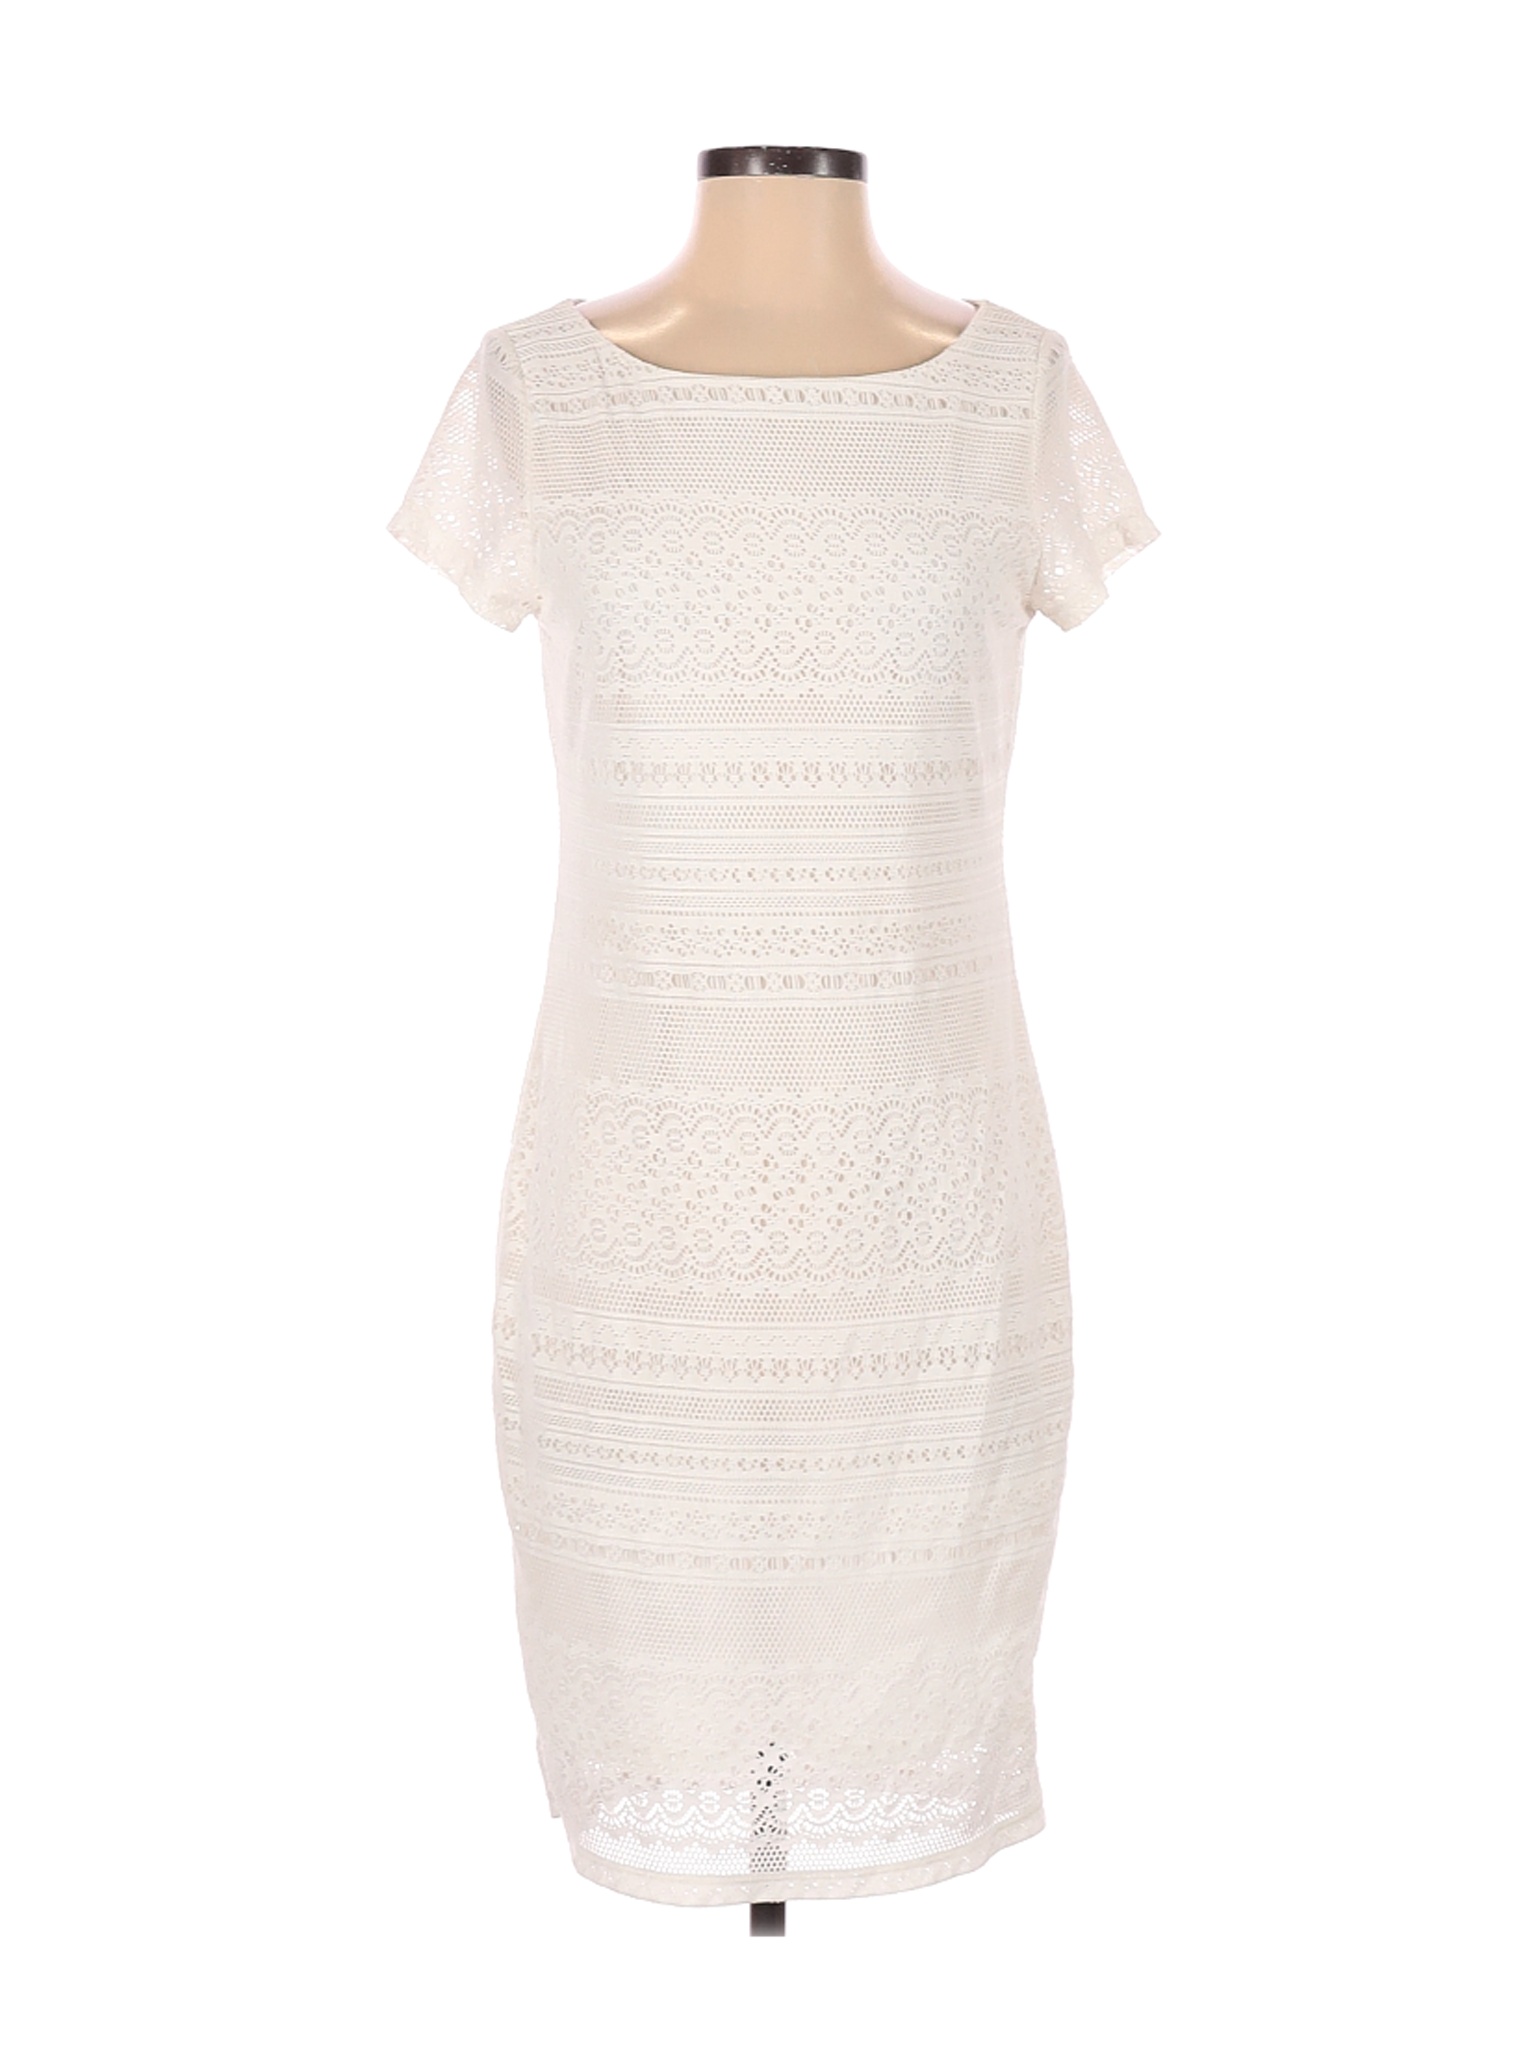 Banana Republic Women White Casual Dress S | eBay